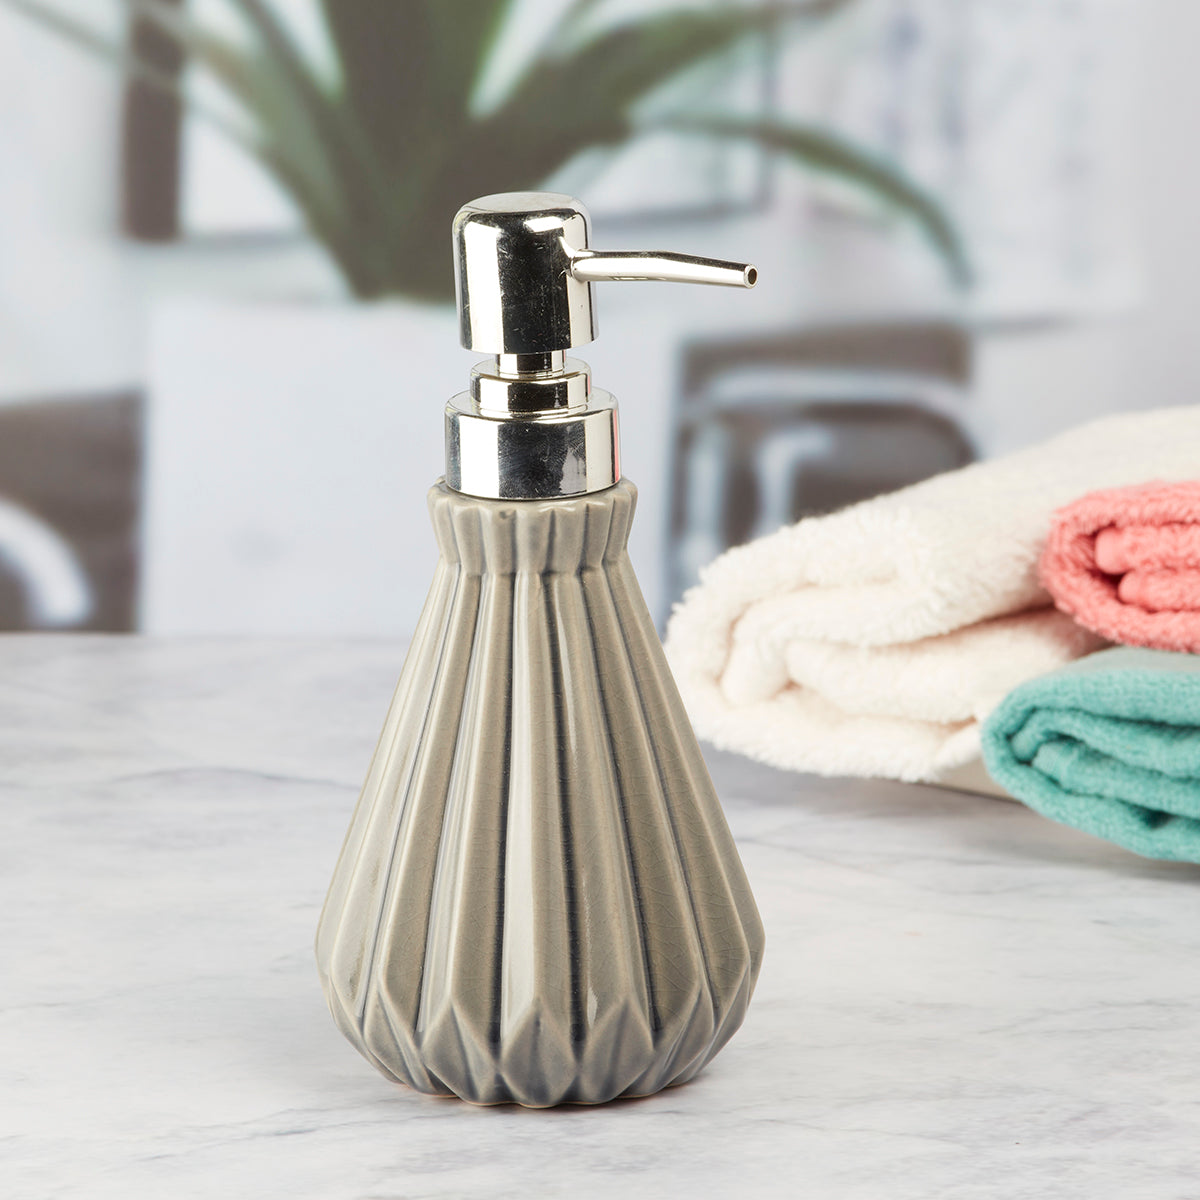 Ceramic Soap Dispenser handwash Pump for Bathroom, Set of 1, Grey (7619)